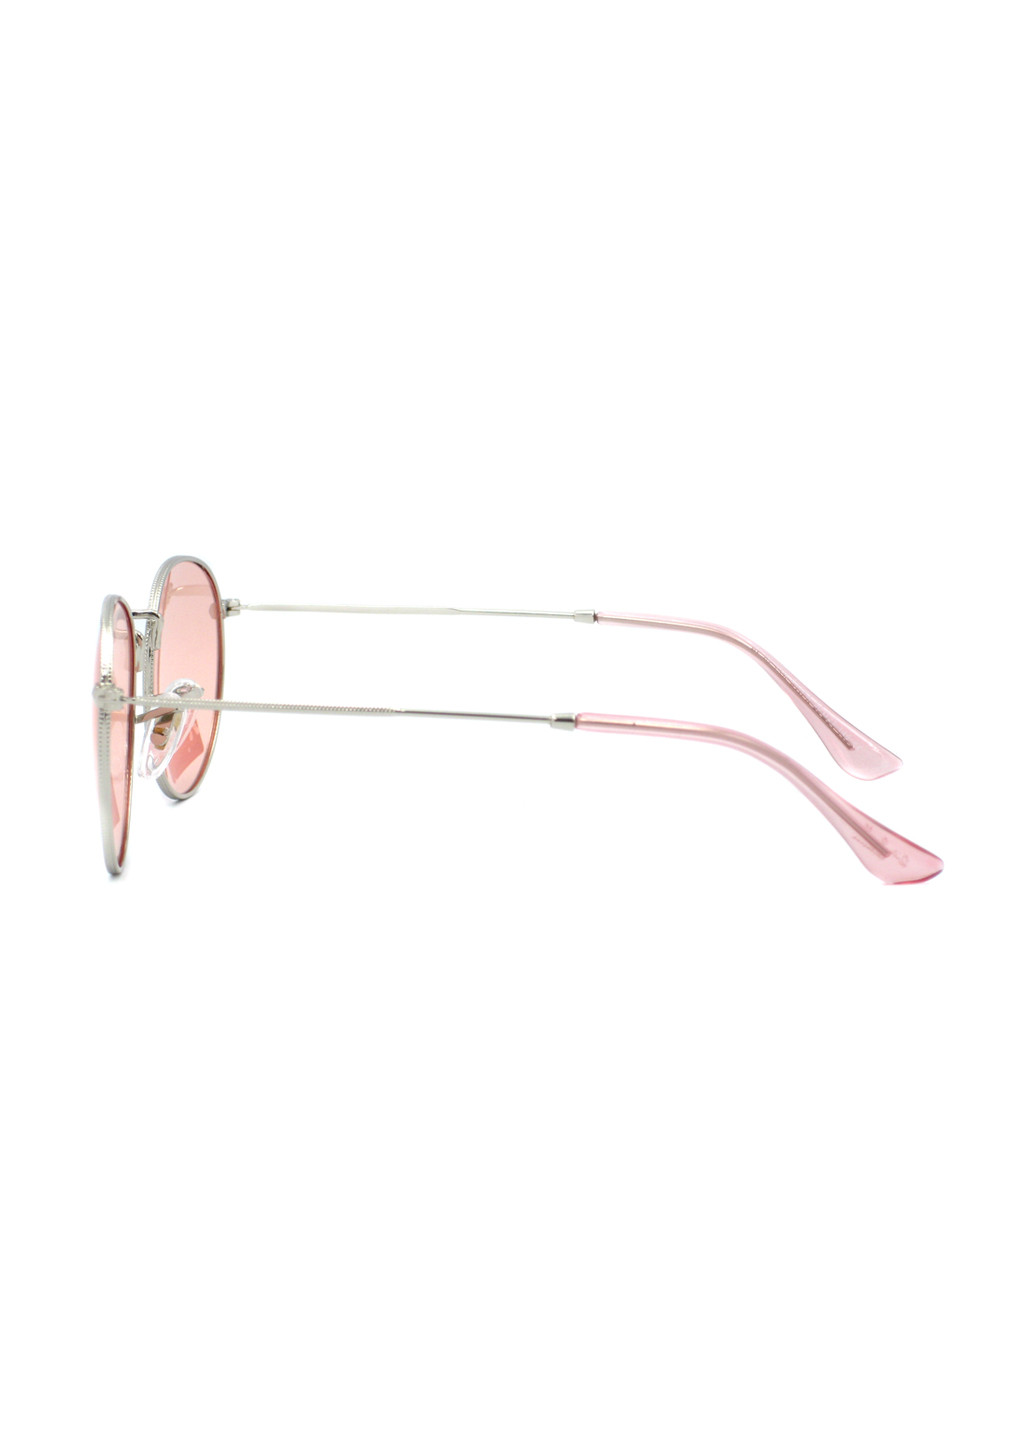 Cолнцезащитные очки Rita Bradley bf02 011px (188980301)